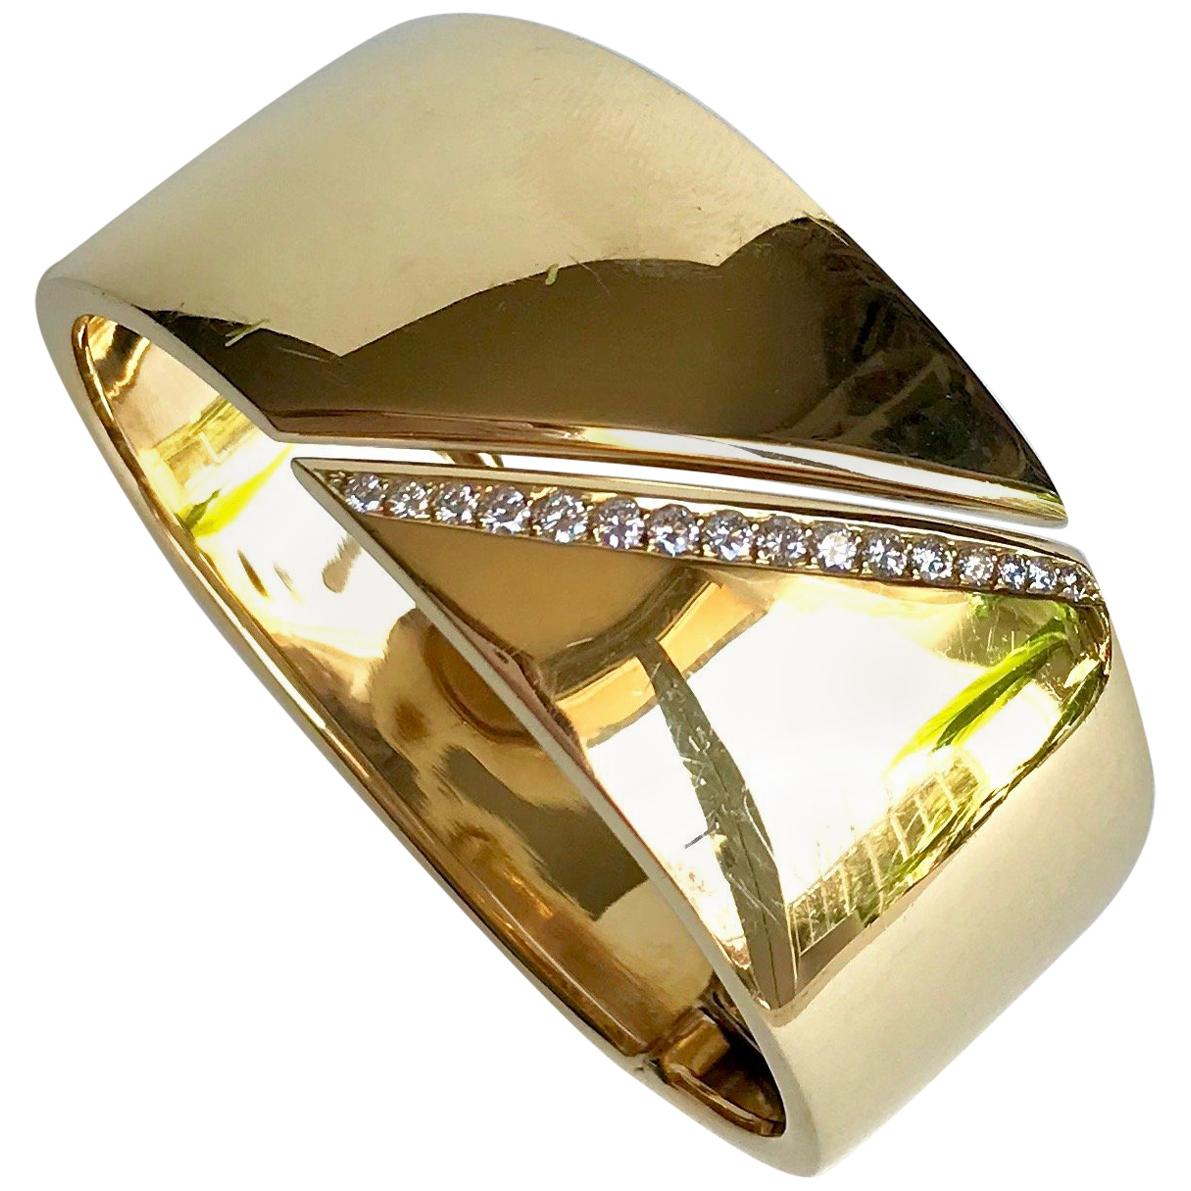 Hermes Rigid Bracelet in 18 Carat Yellow Gold and Line of Diamonds